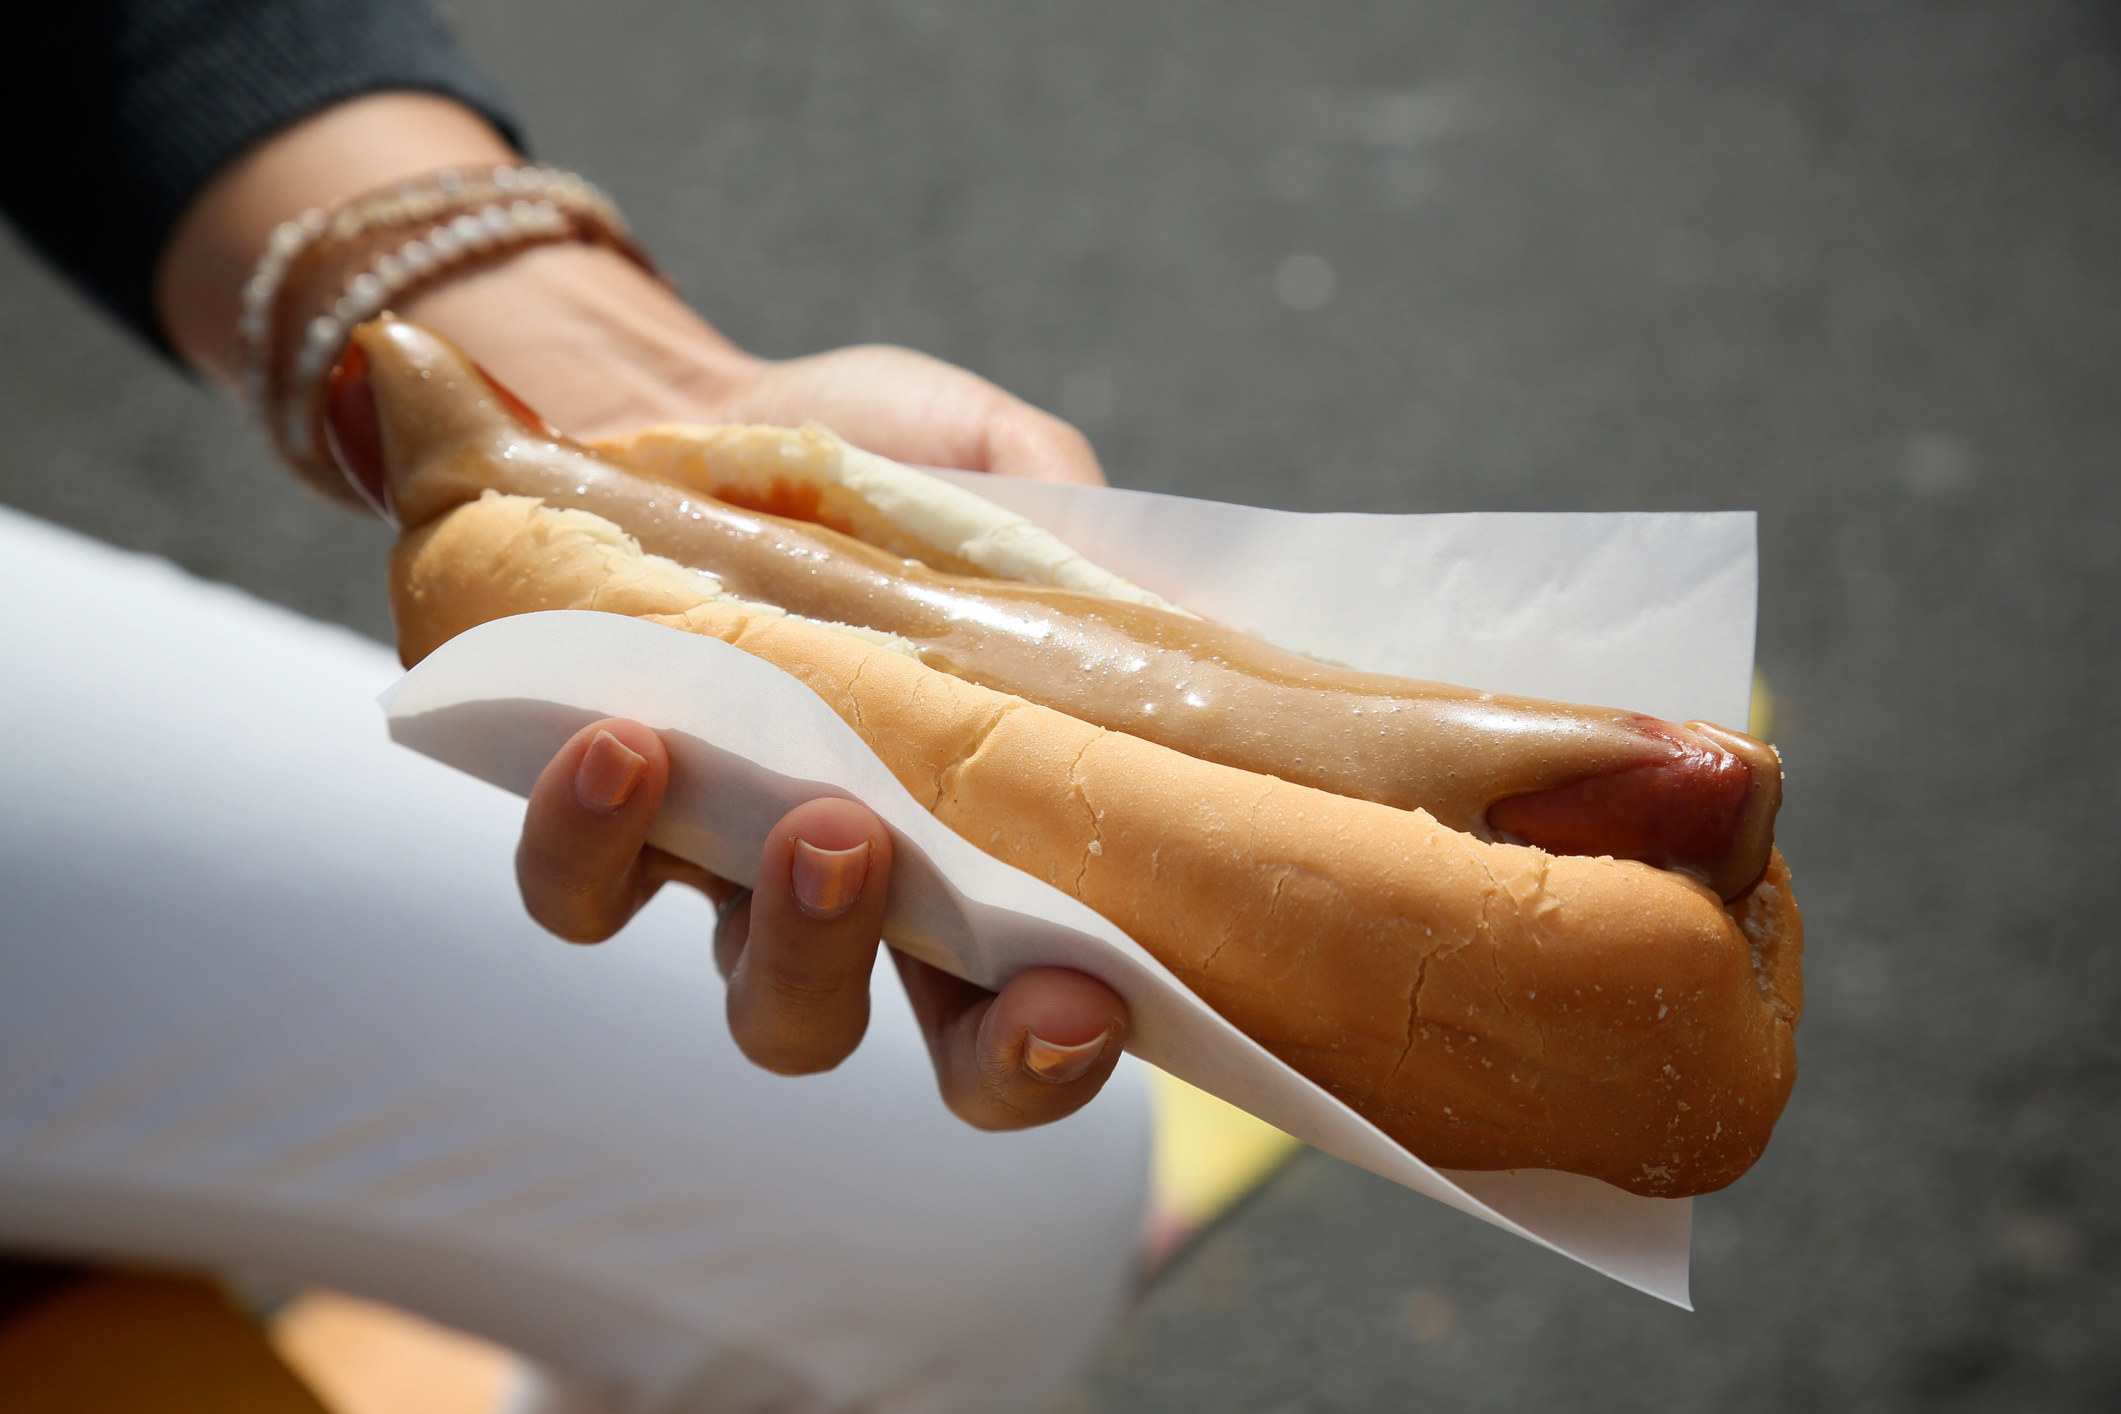 A hand holding an Icelandic hot dog.